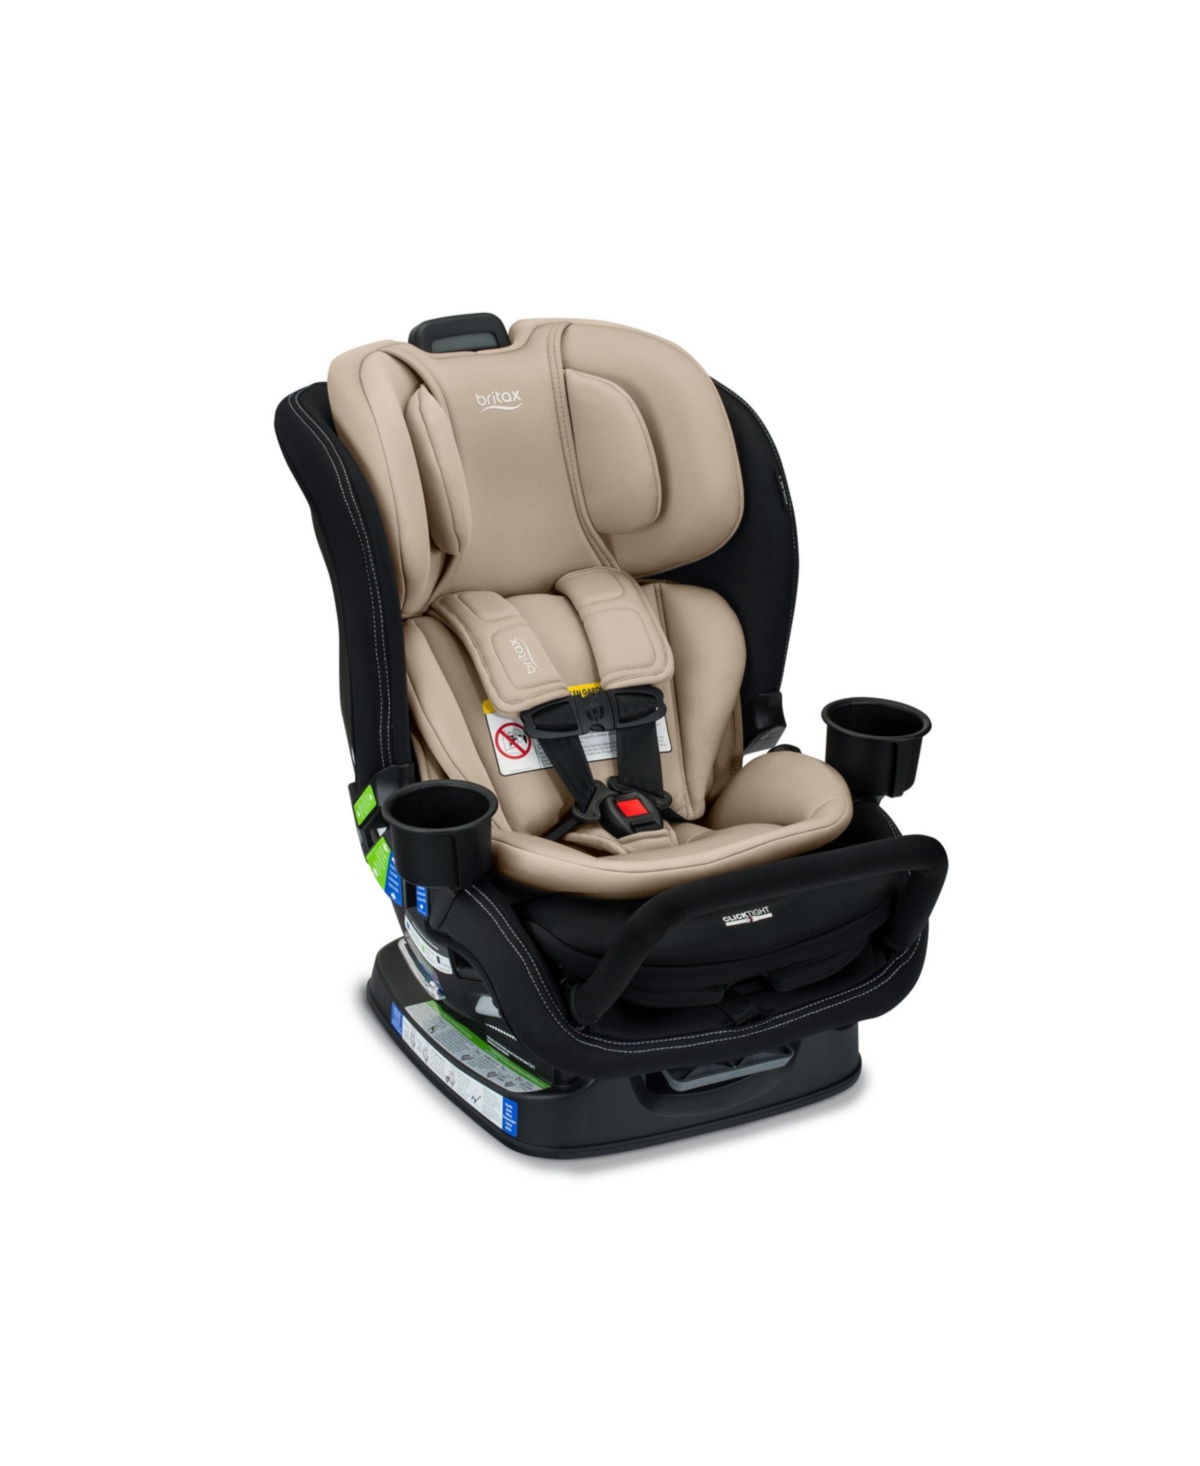 Britax Poplar S Baby Boy Or Baby Girl Convertible Car Seat In Brown